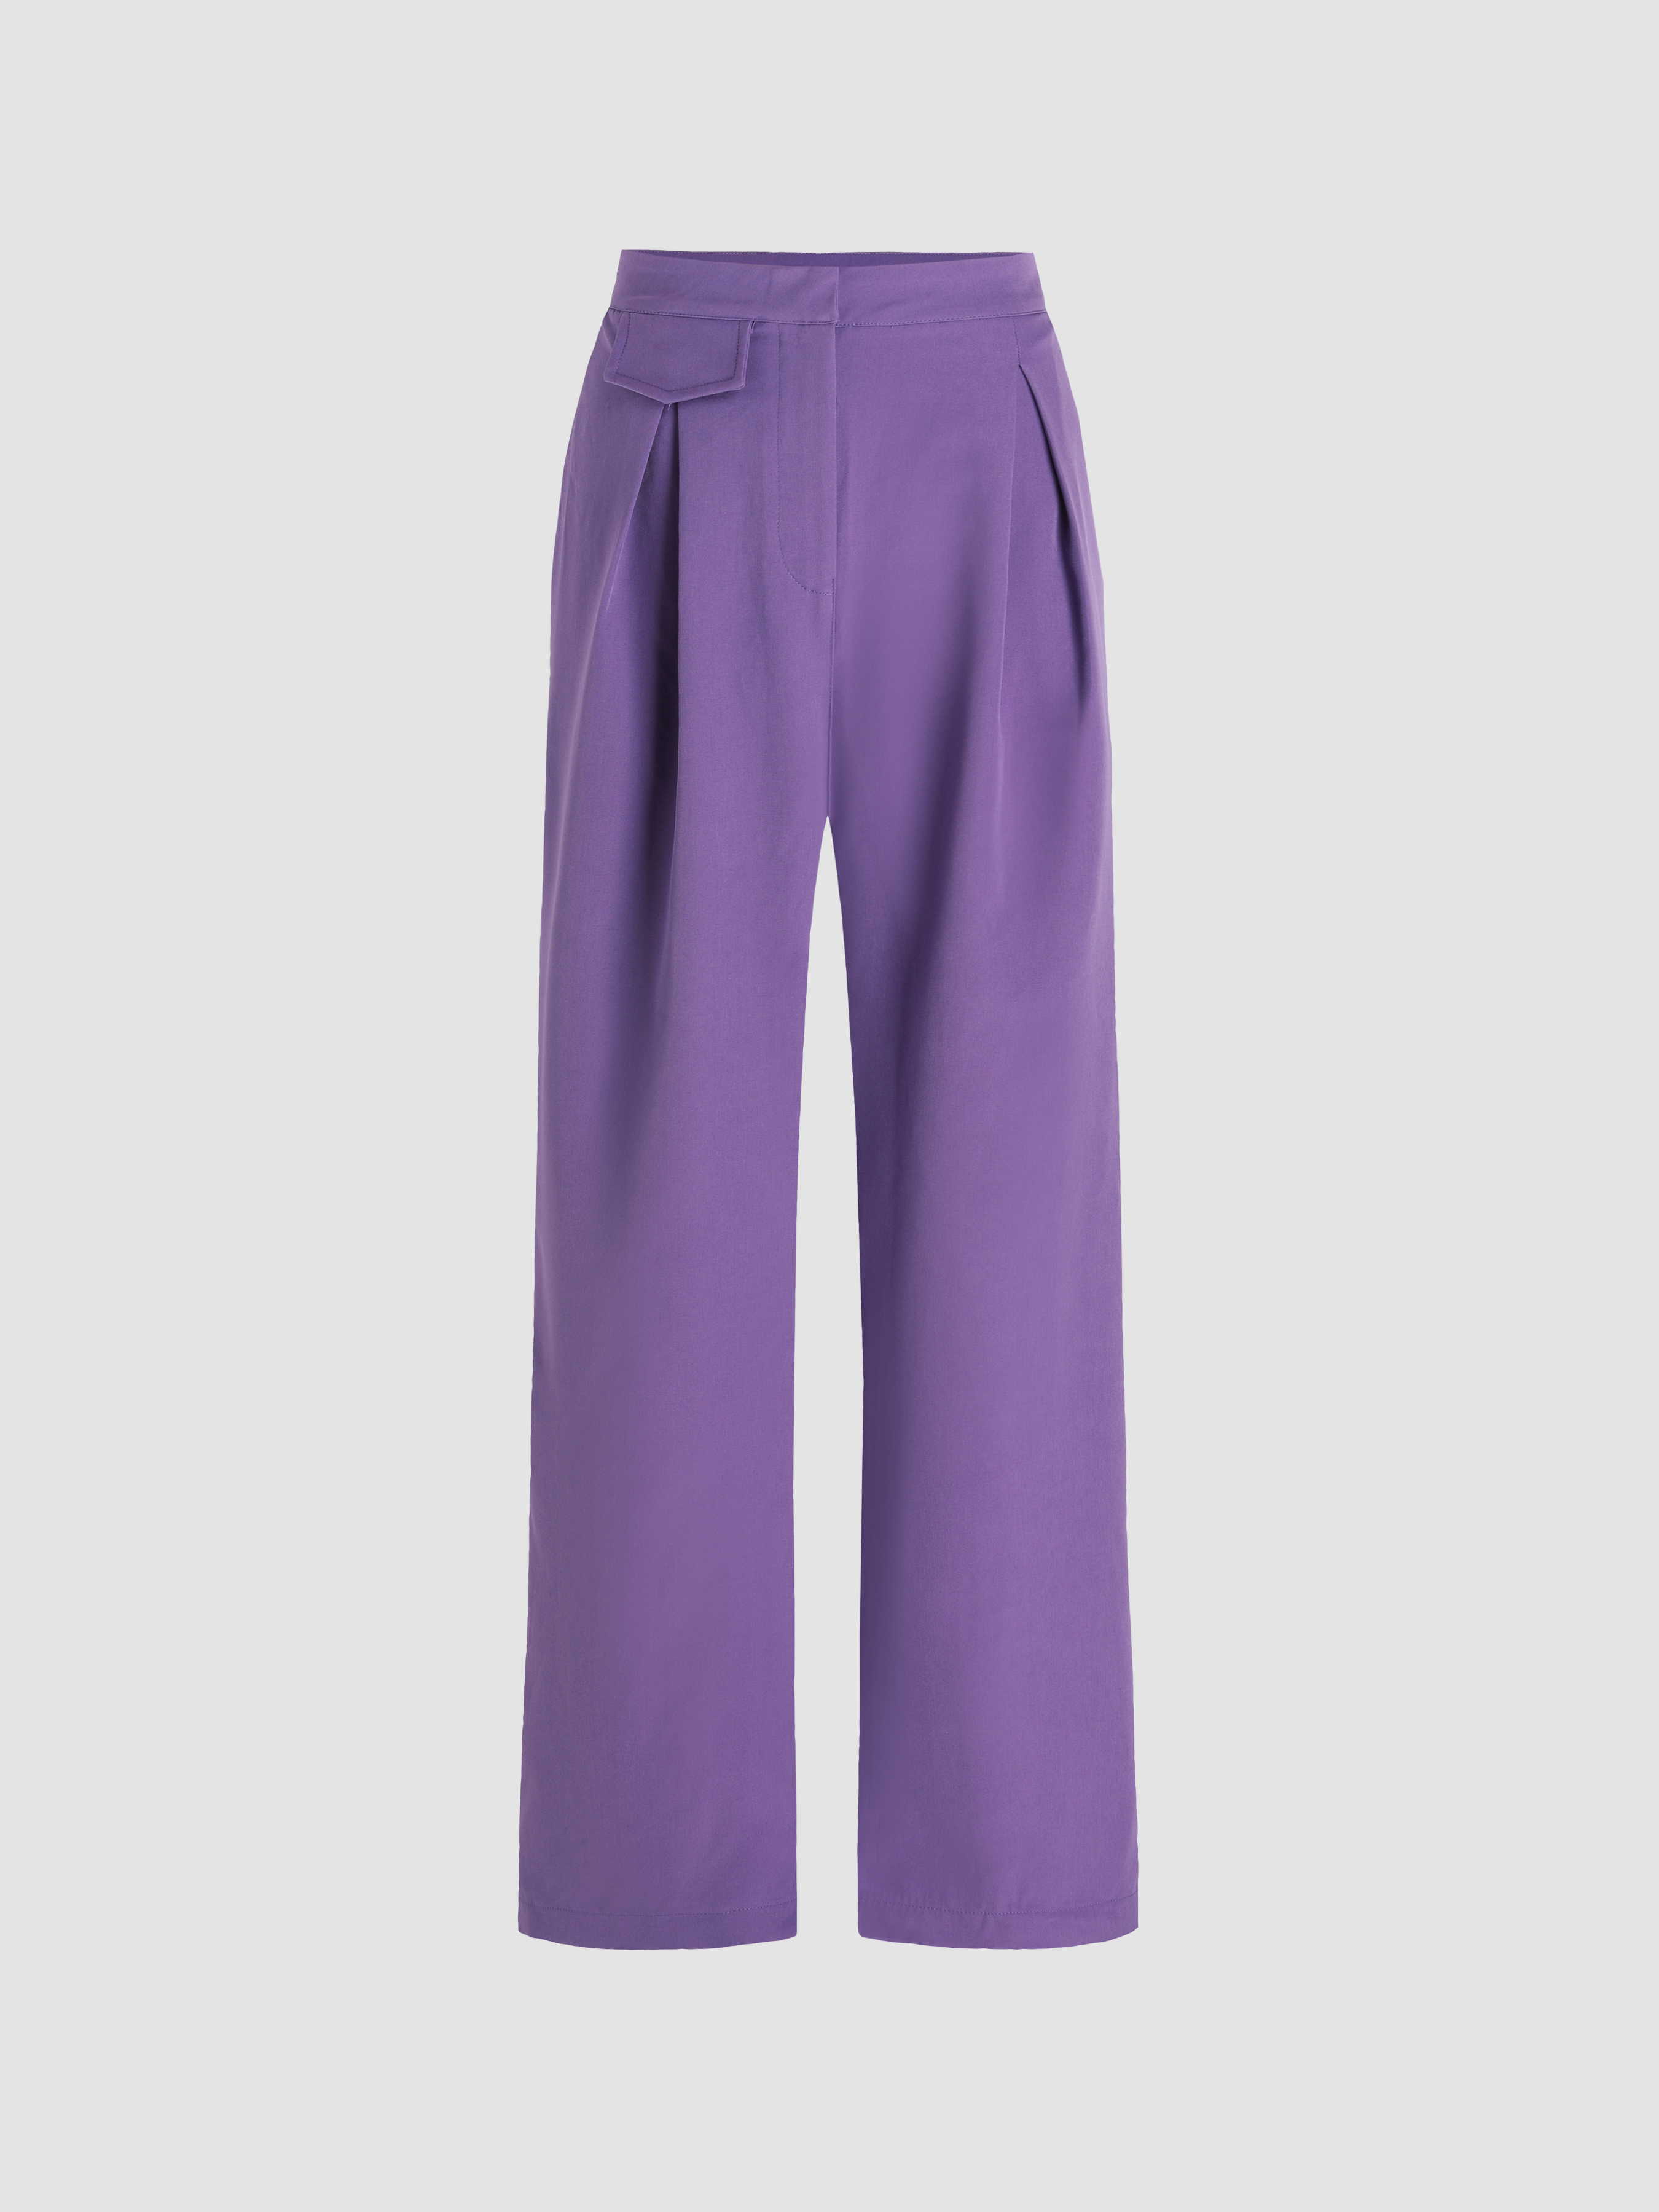 Elegant Plain Wide Leg Purple Women's Pants (Women's) - Walmart.com